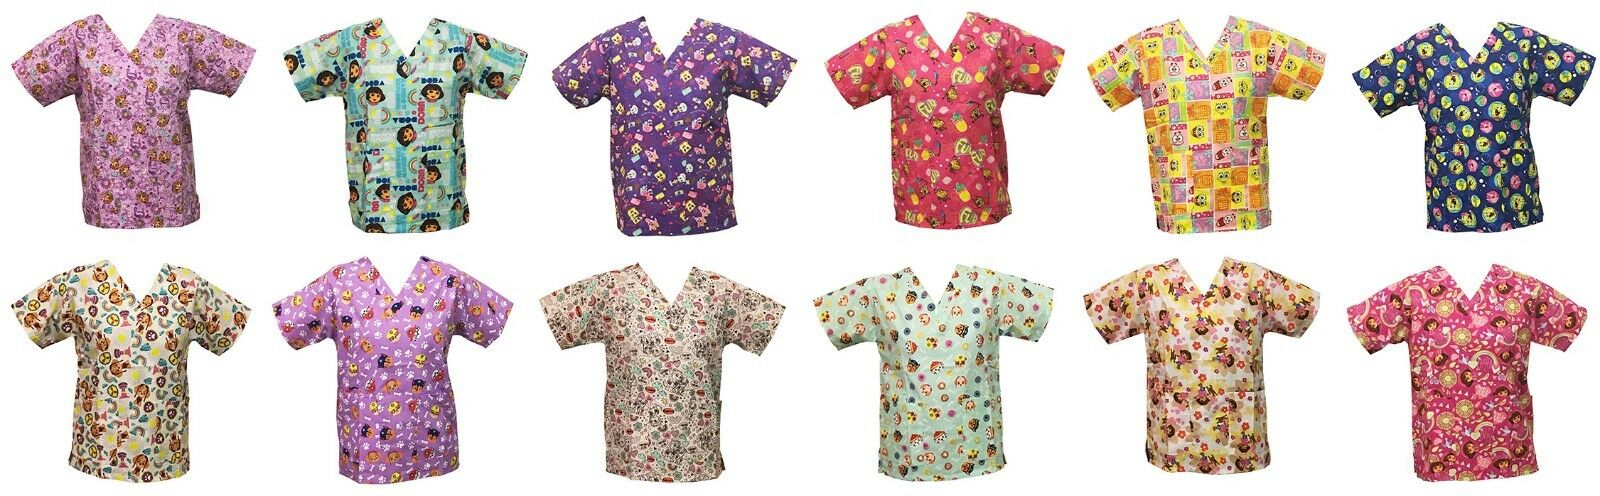 Nickelodeon Womens Nursing Medical Pediatric Character Scrubs Shirt Tops